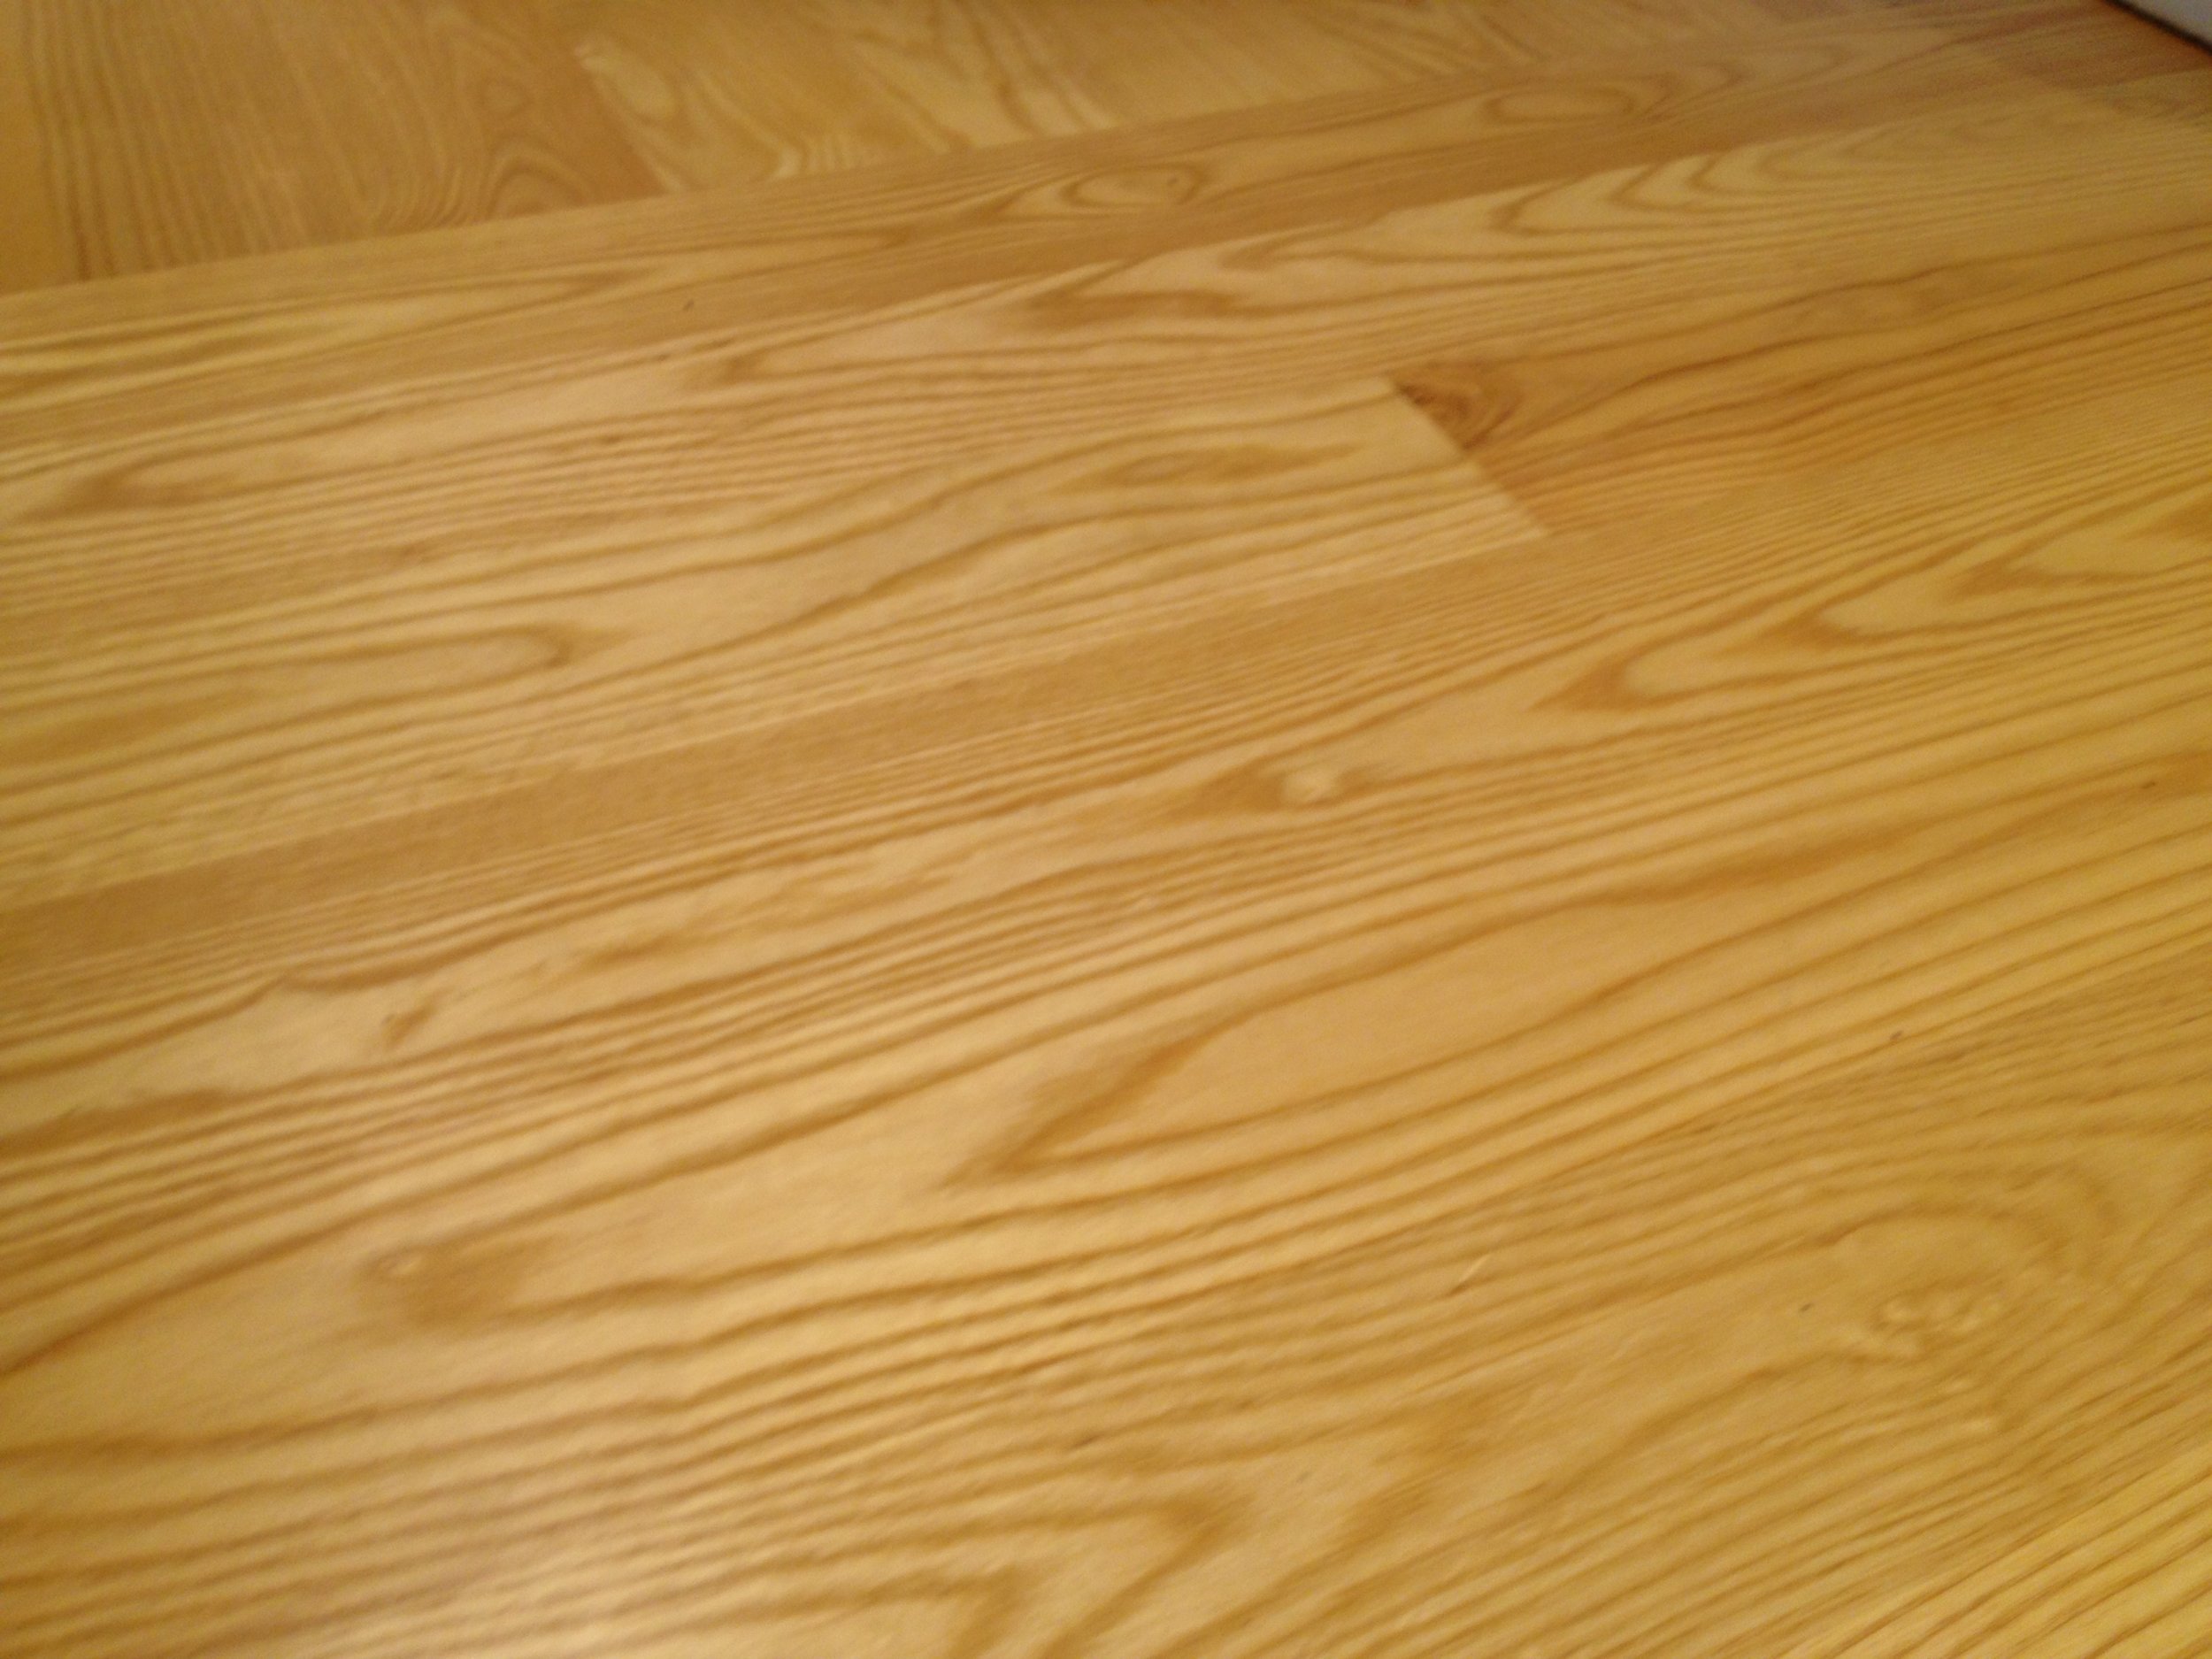 Oil Based Vs Water Polyurethane, What Is The Best Brand Of Polyurethane For Hardwood Floors